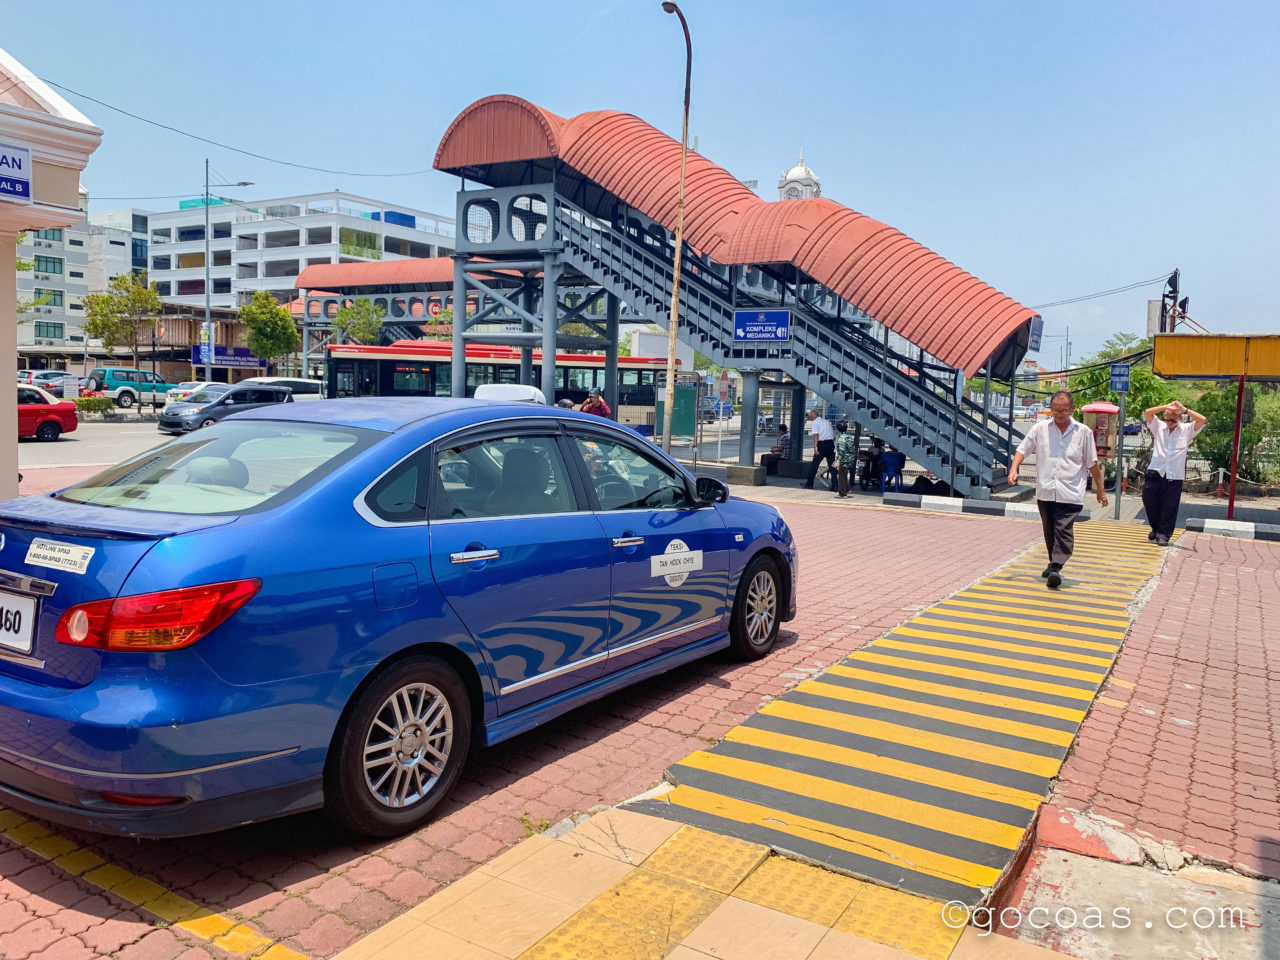 Penang島フェリー到着口のタクシー乗り場と横断歩道